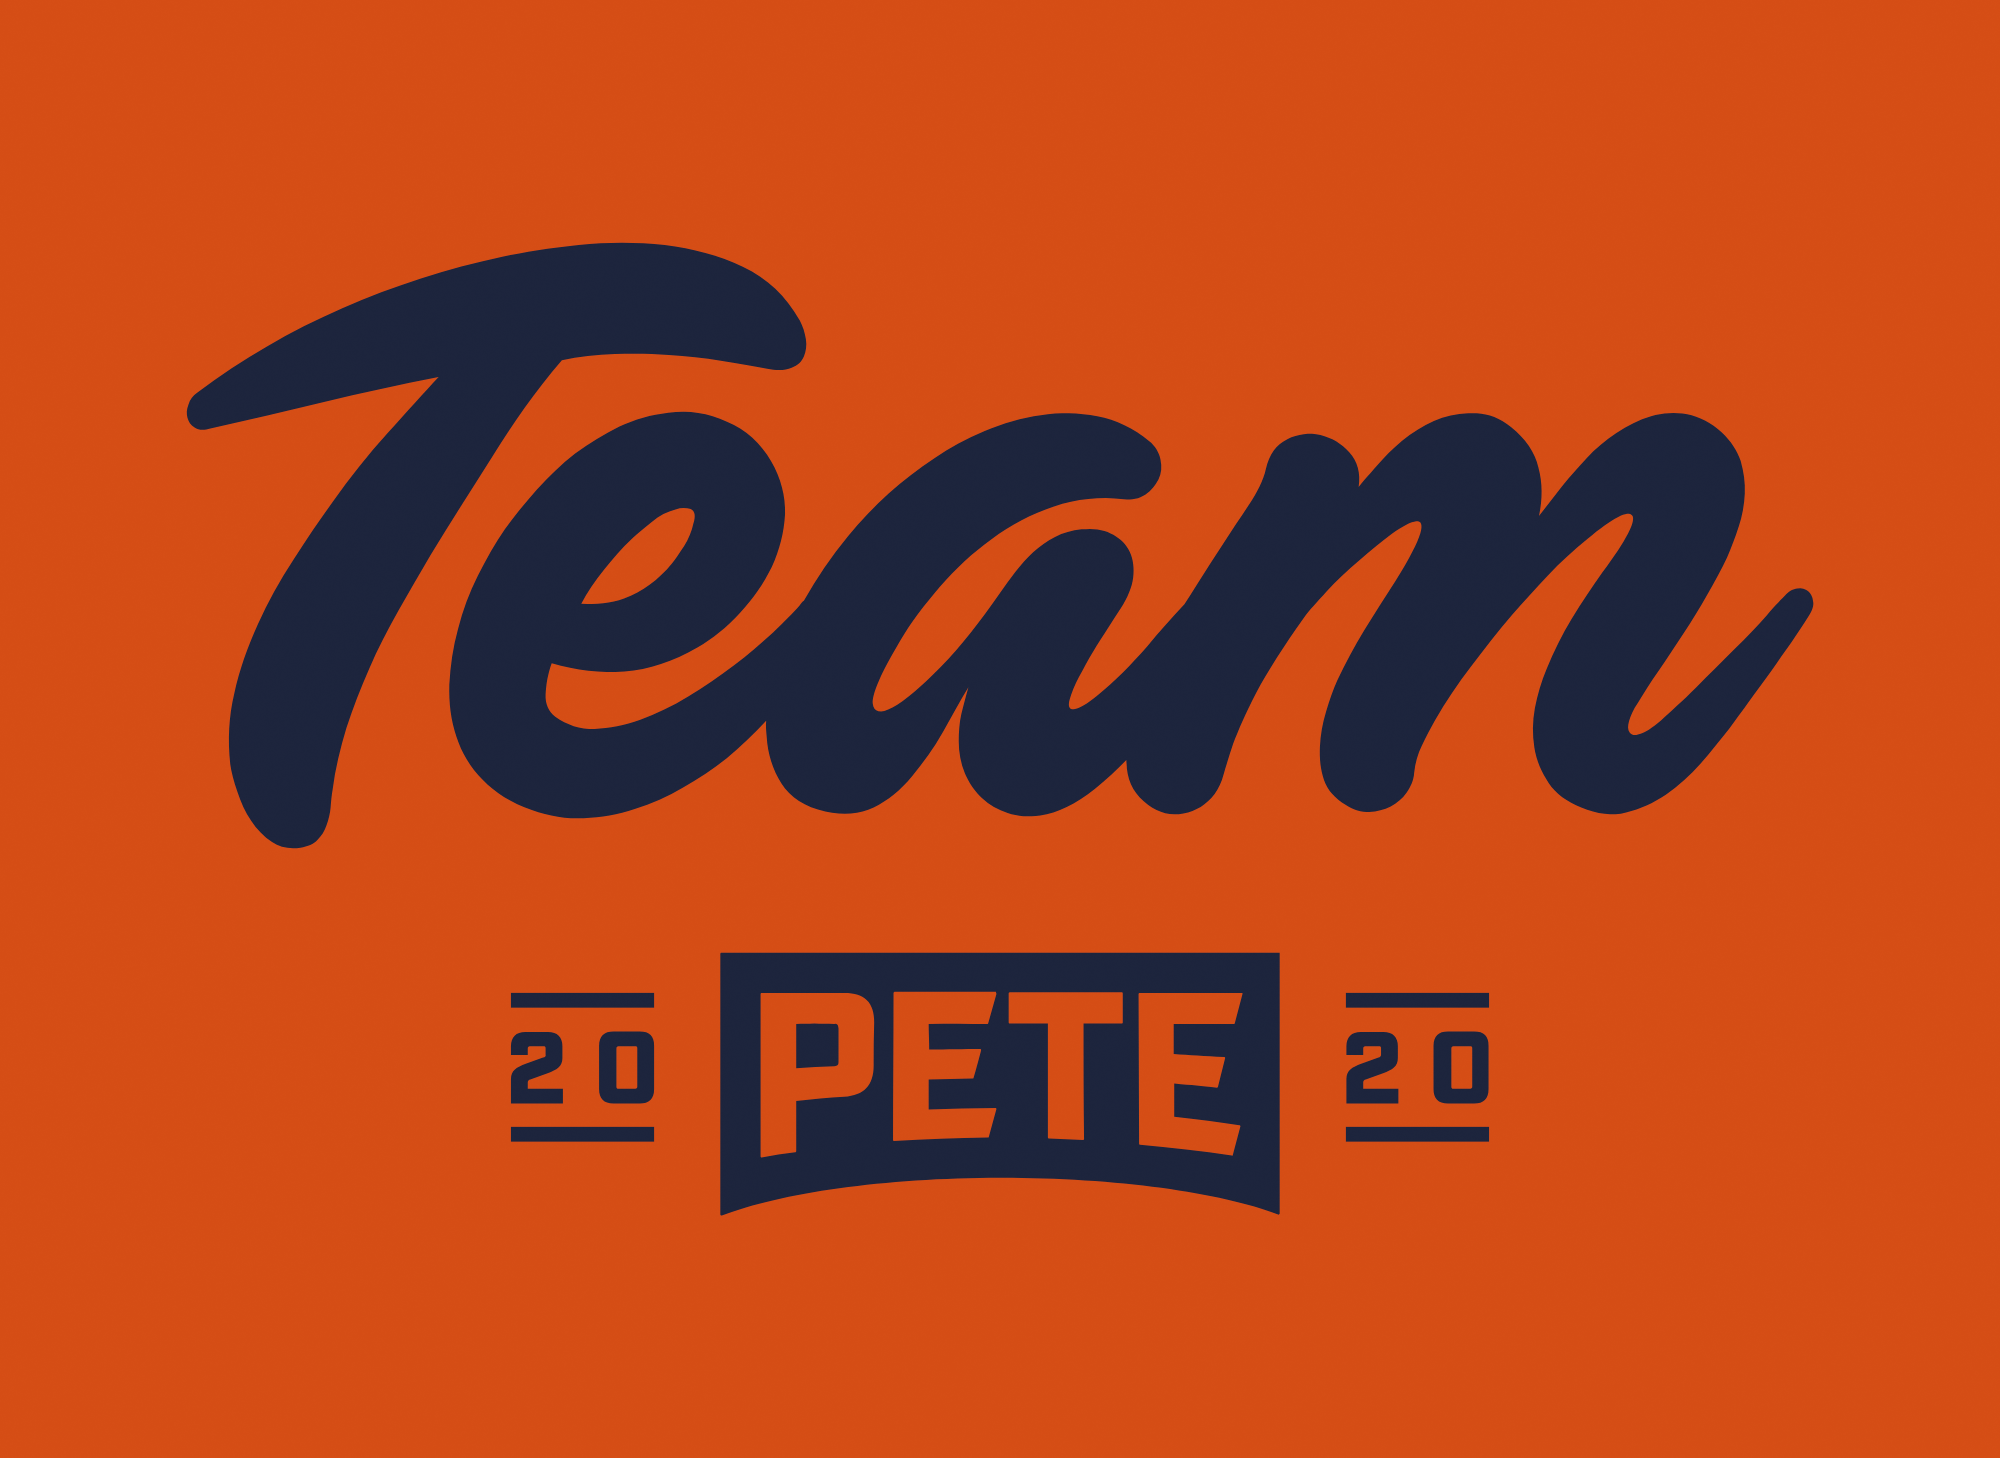 New Logo and Identity for Pete Buttigieg by Hyperakt